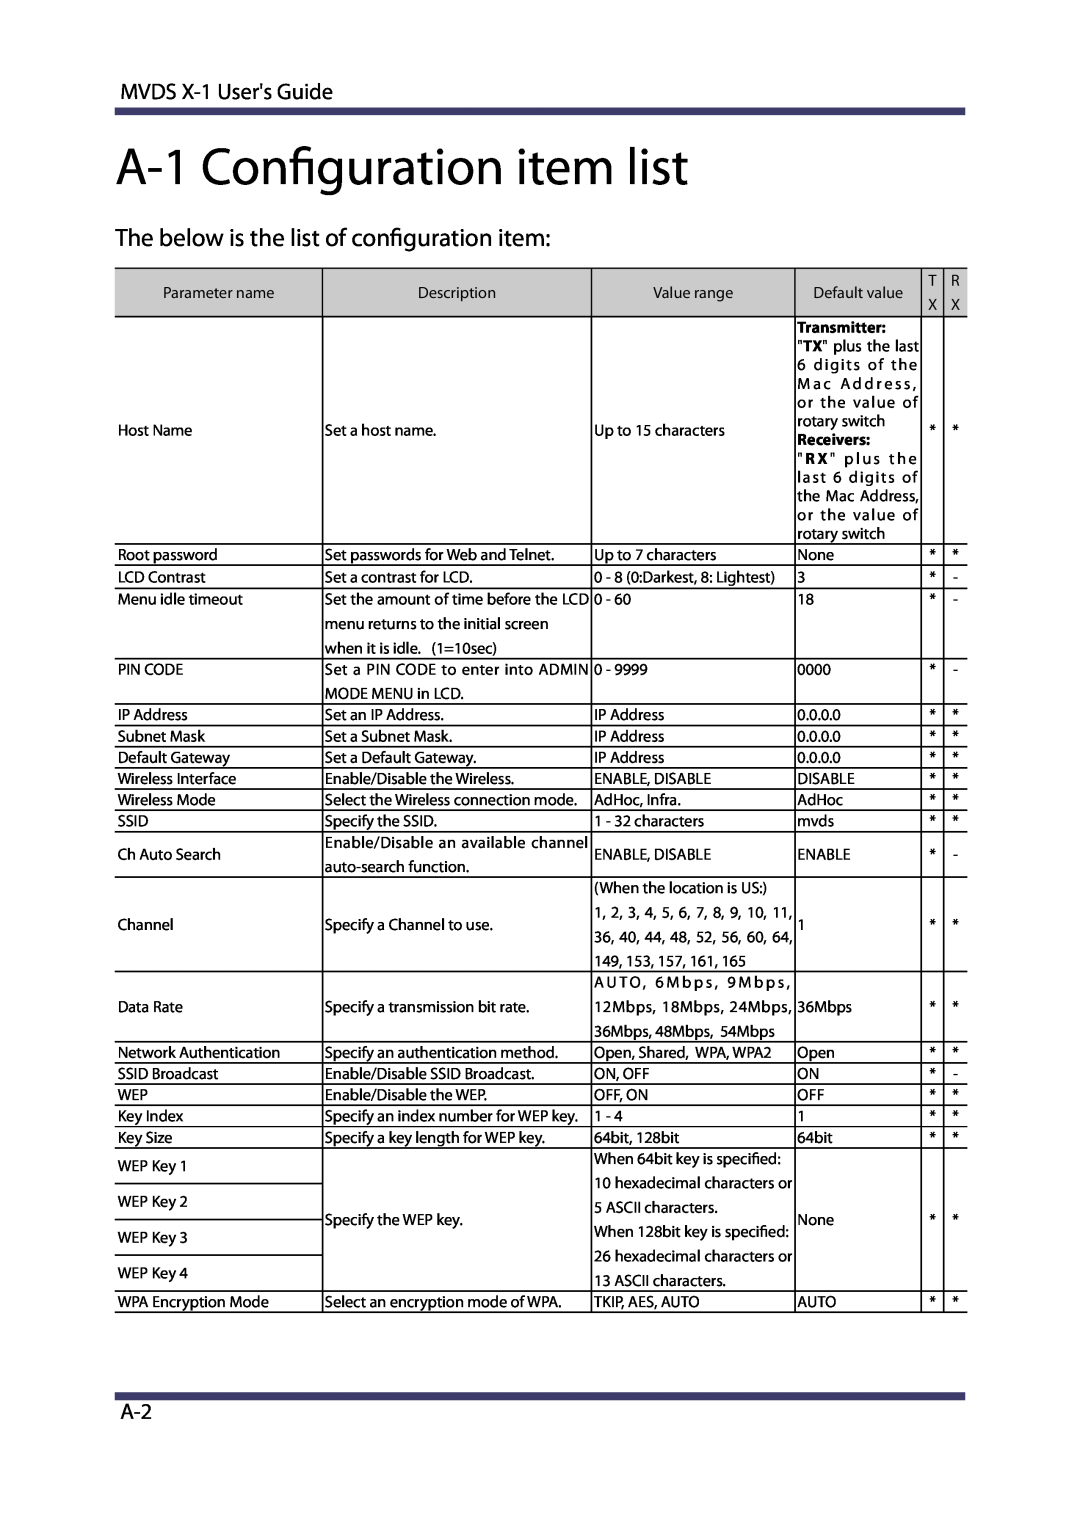 Silex technology MVDS X-1 A-1Configuration item list, The below is the list of configuration item, Transmitter, Receivers 